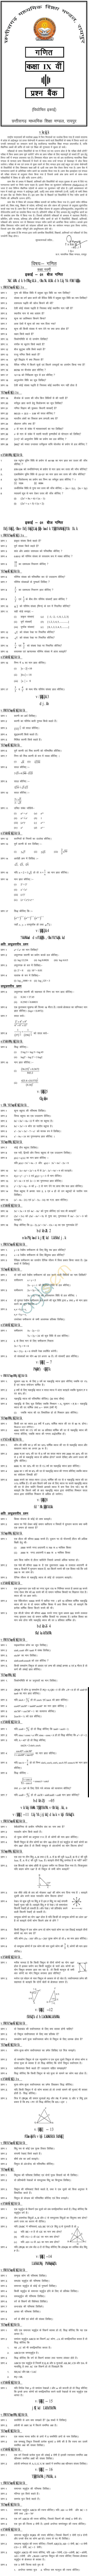 Chhattisgarh Board Class 09 Question Bank - Maths